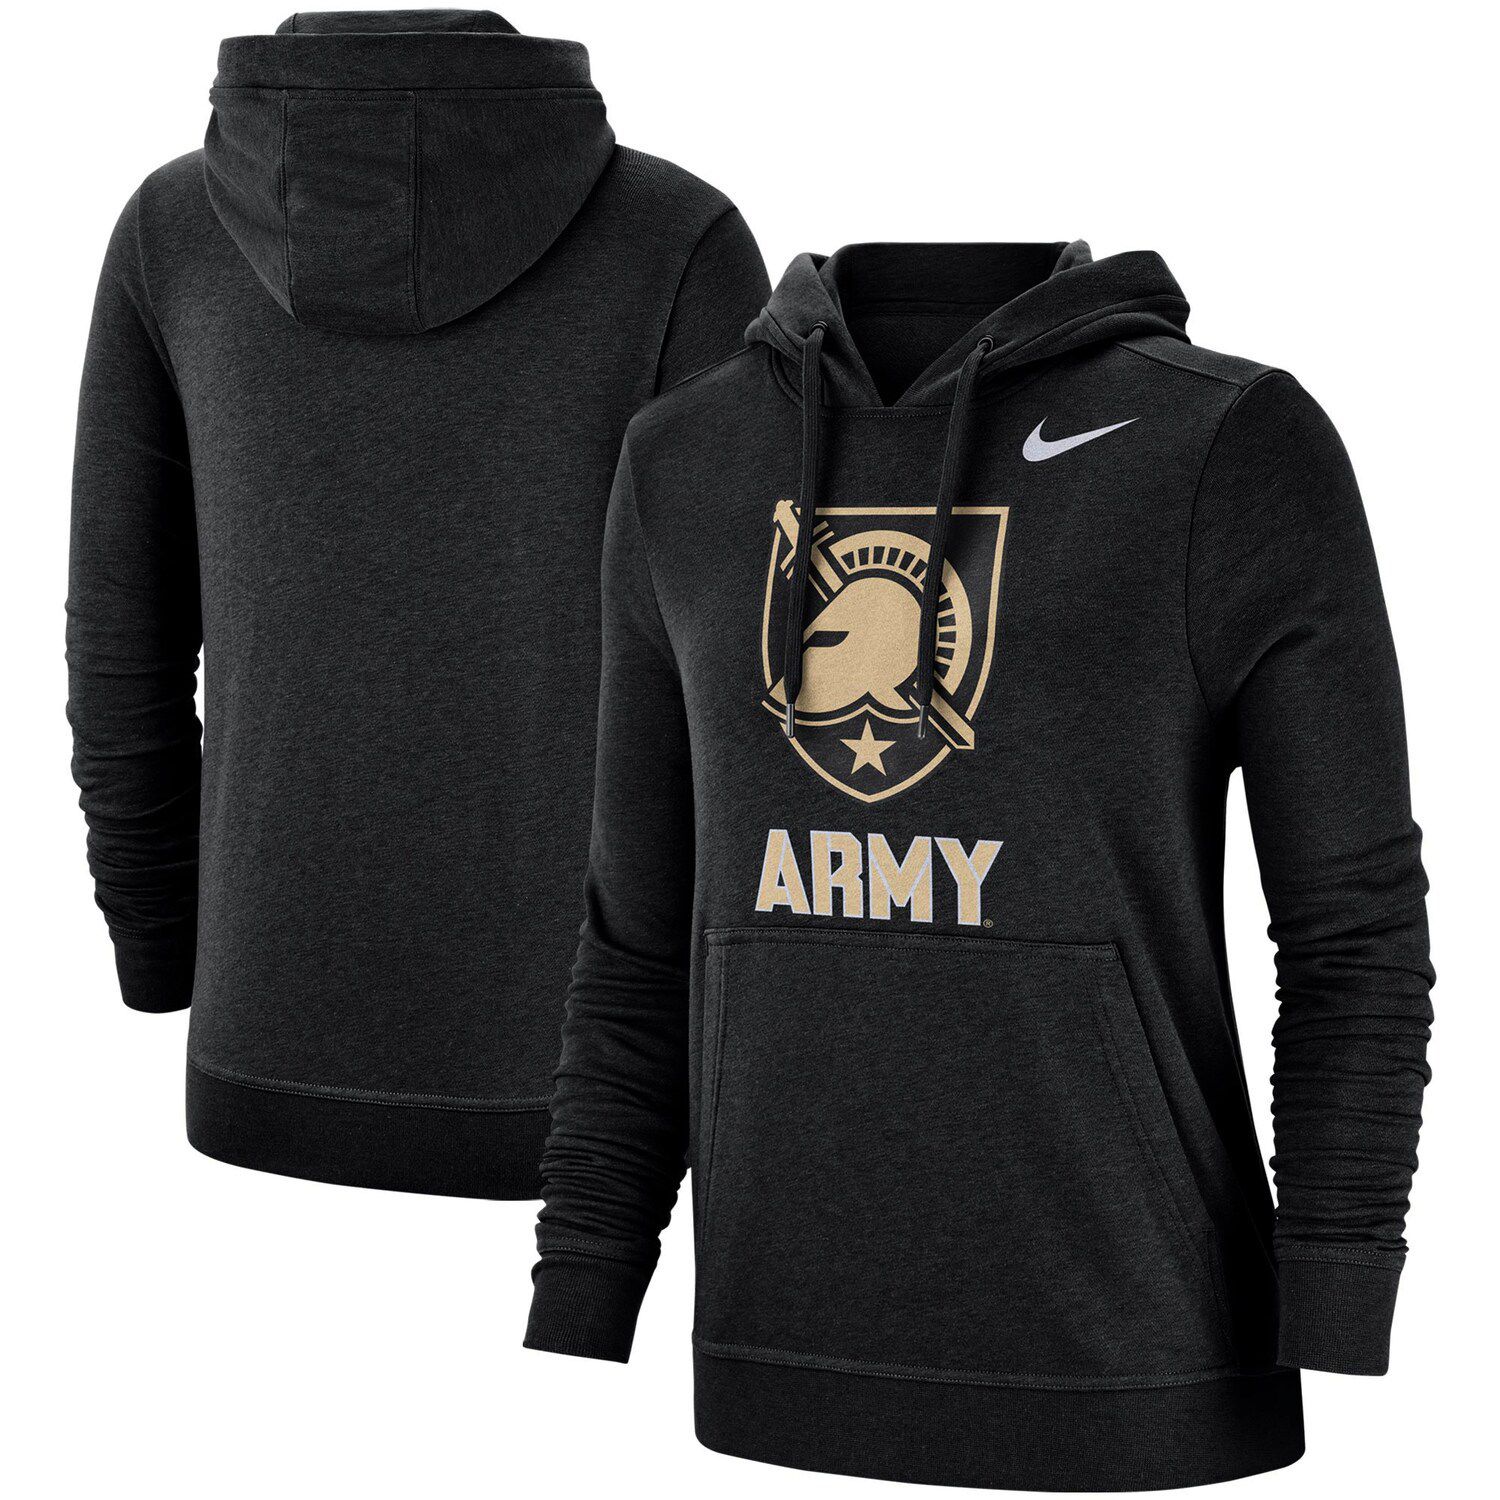 nike army clothing